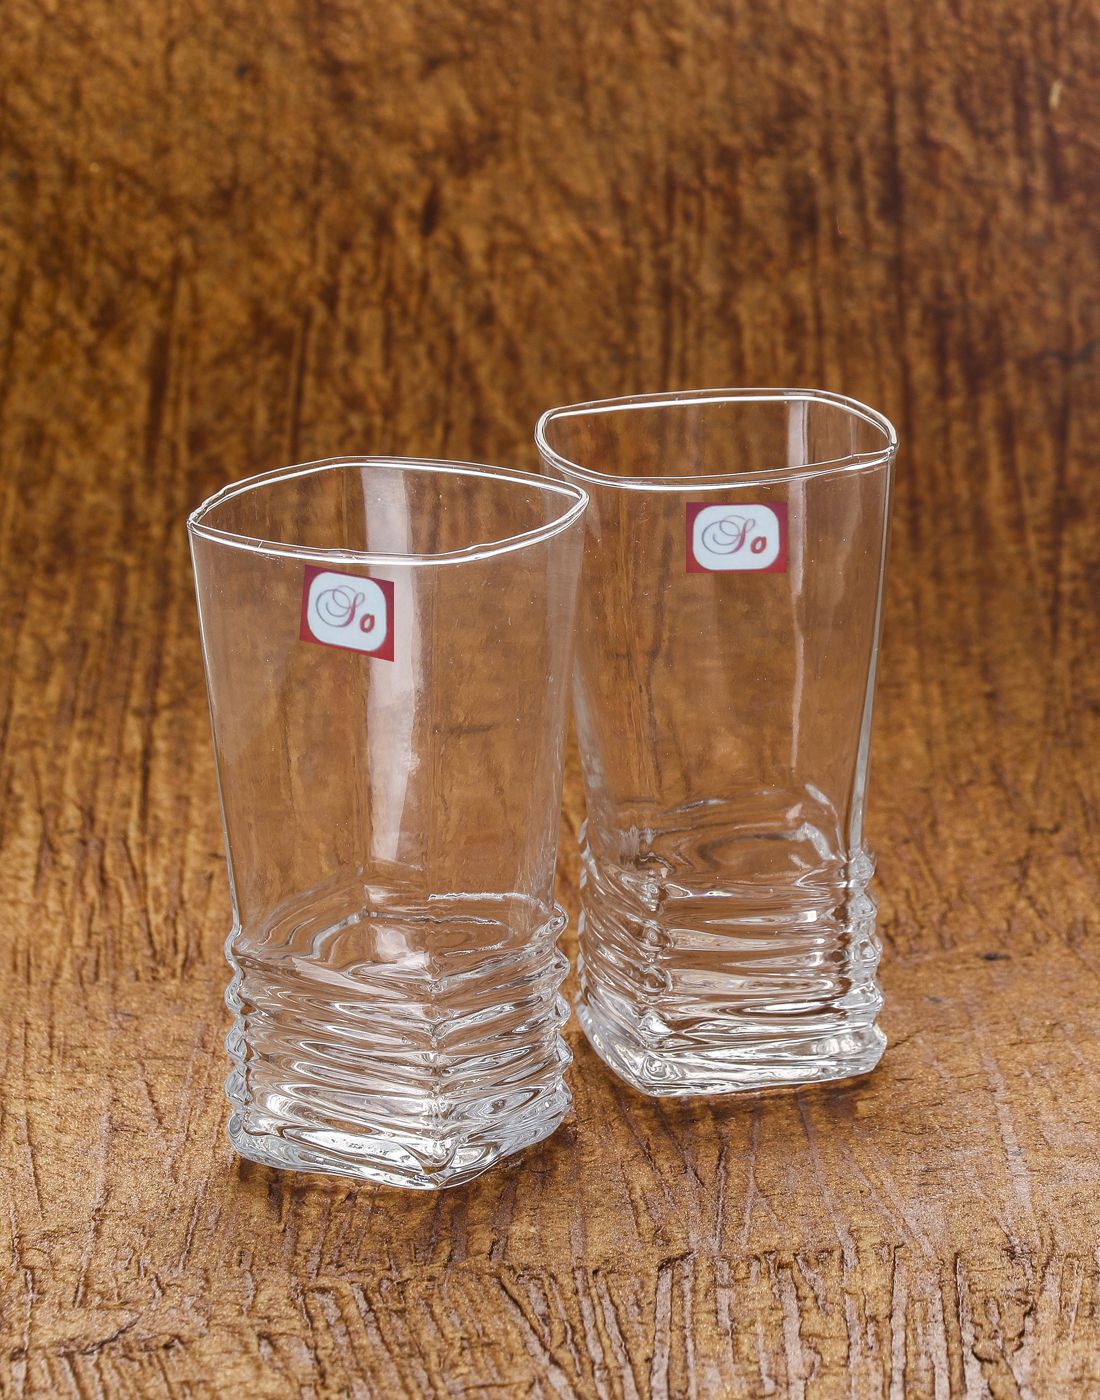     			Somil Water/Juice  Glasses Set,  300 ML - (Pack Of 2)